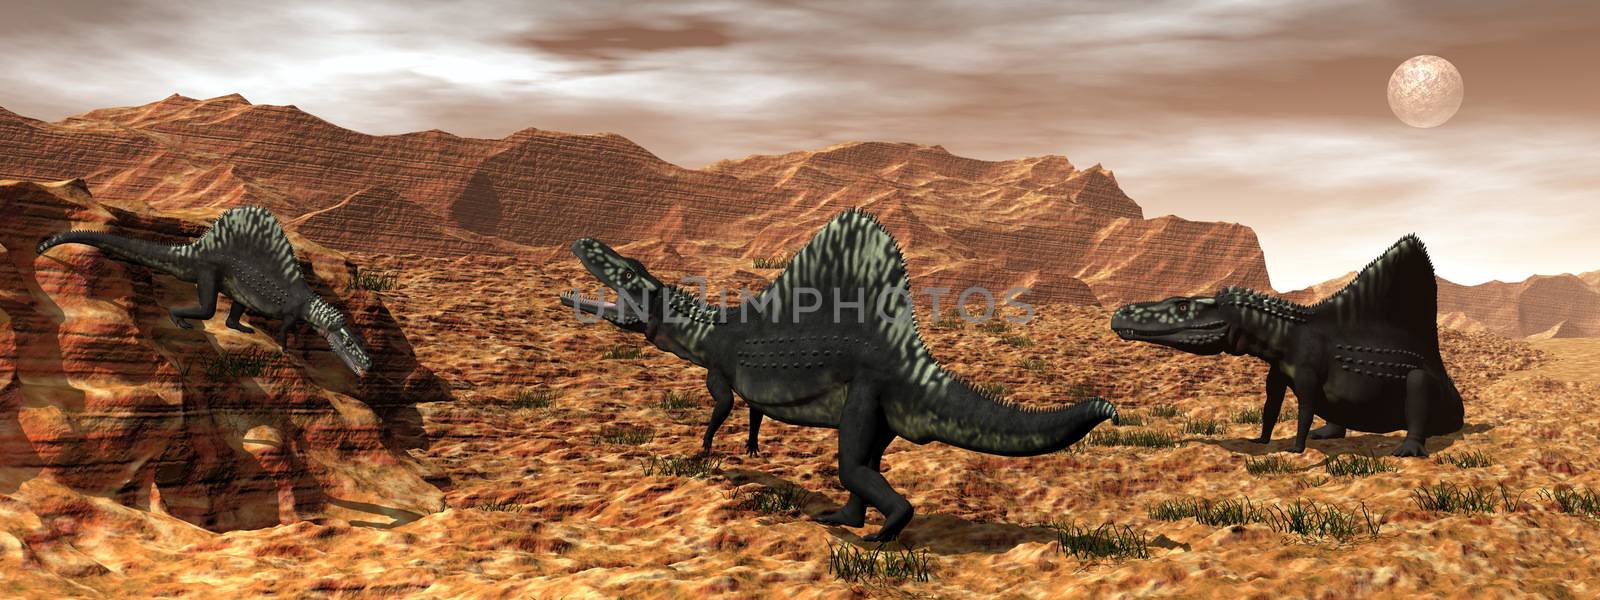 Arizonasaurus dinosaurs - 3D render by Elenaphotos21